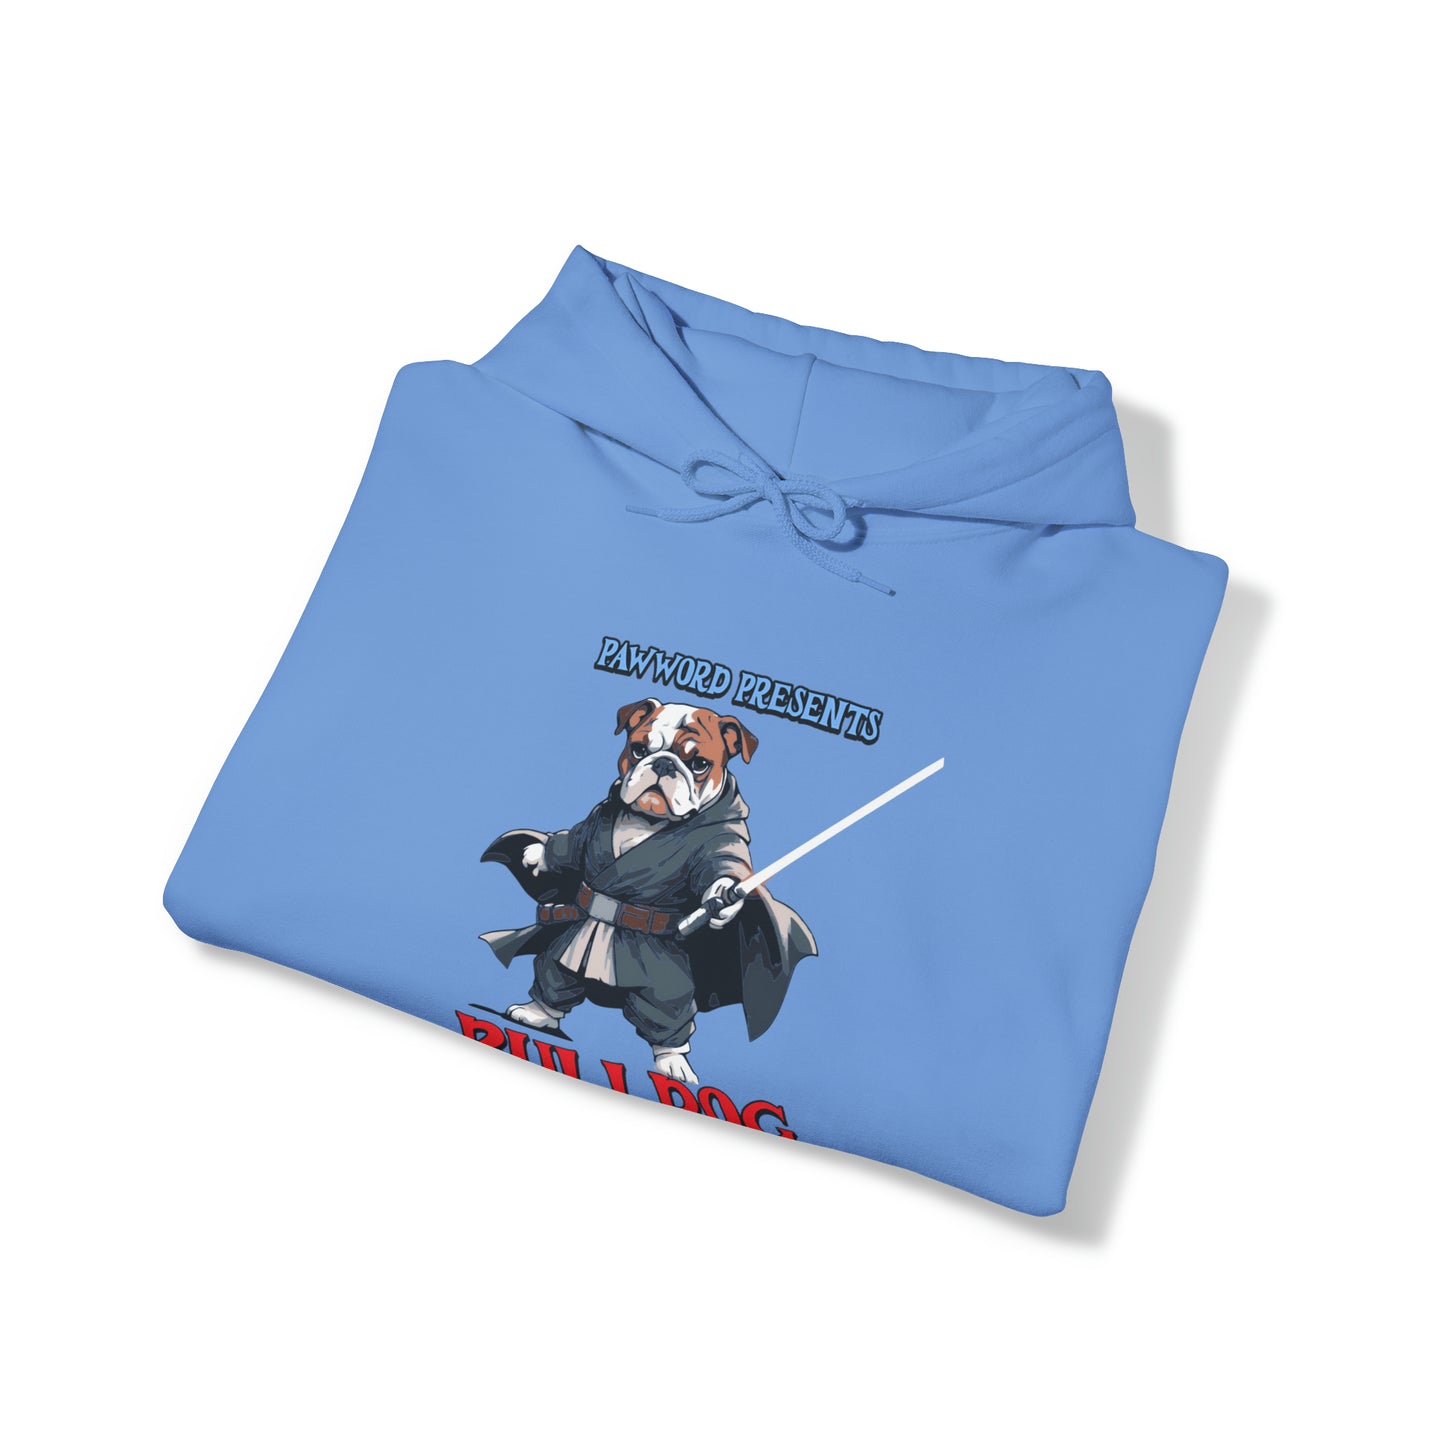 Bulldog Jedi Master - PawWord - Unisex Heavy Blend™ Hooded Sweatshirt